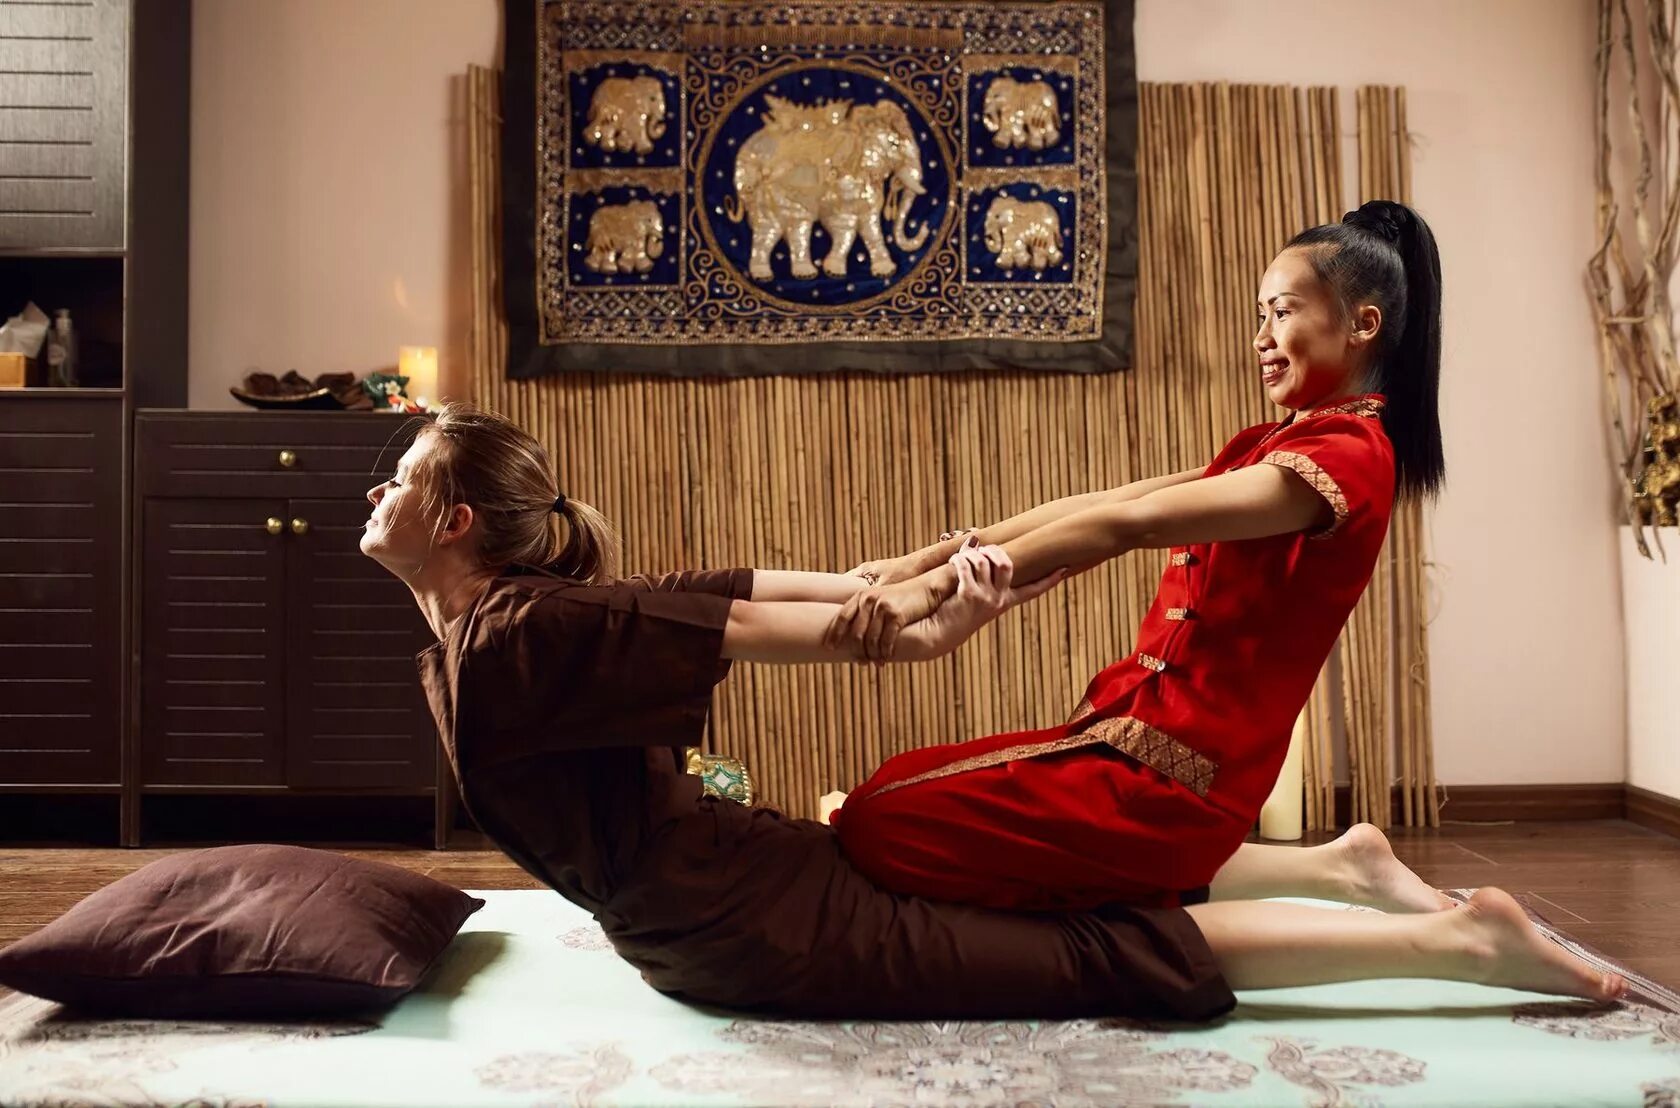 Traditional massage. Тайский массаж. Традиционный тайский массаж. Тайский йога массаж. Тайских традиционый массаж.